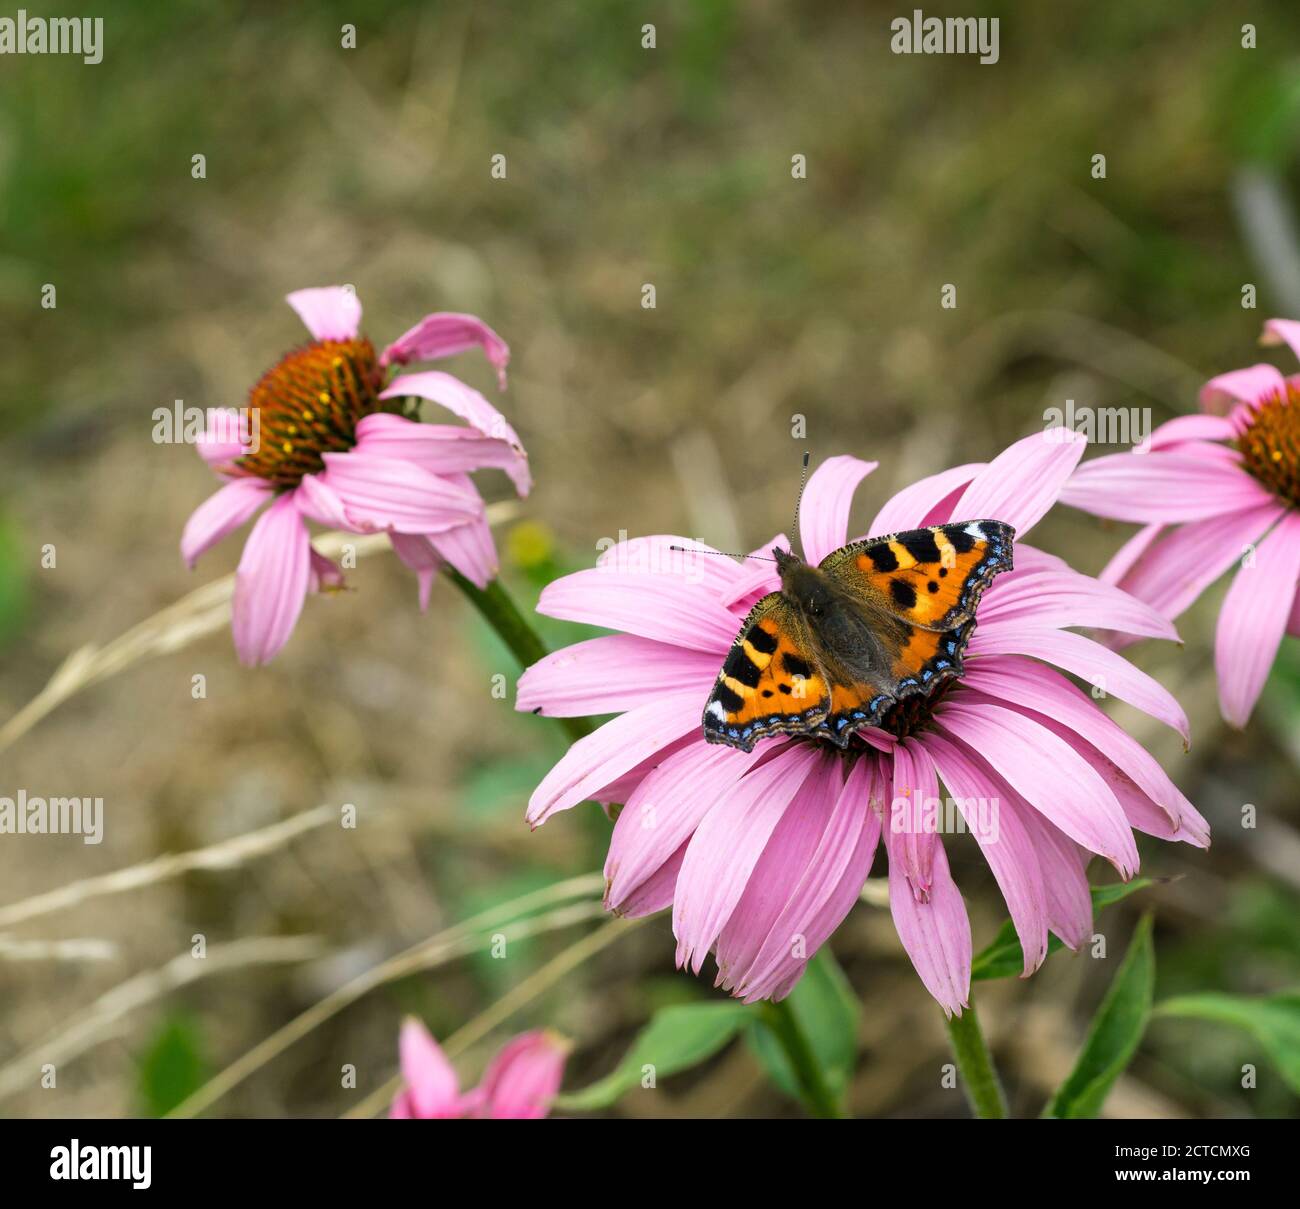 Small tortoiseshell butterfly feeding on pink flower Stock Photo